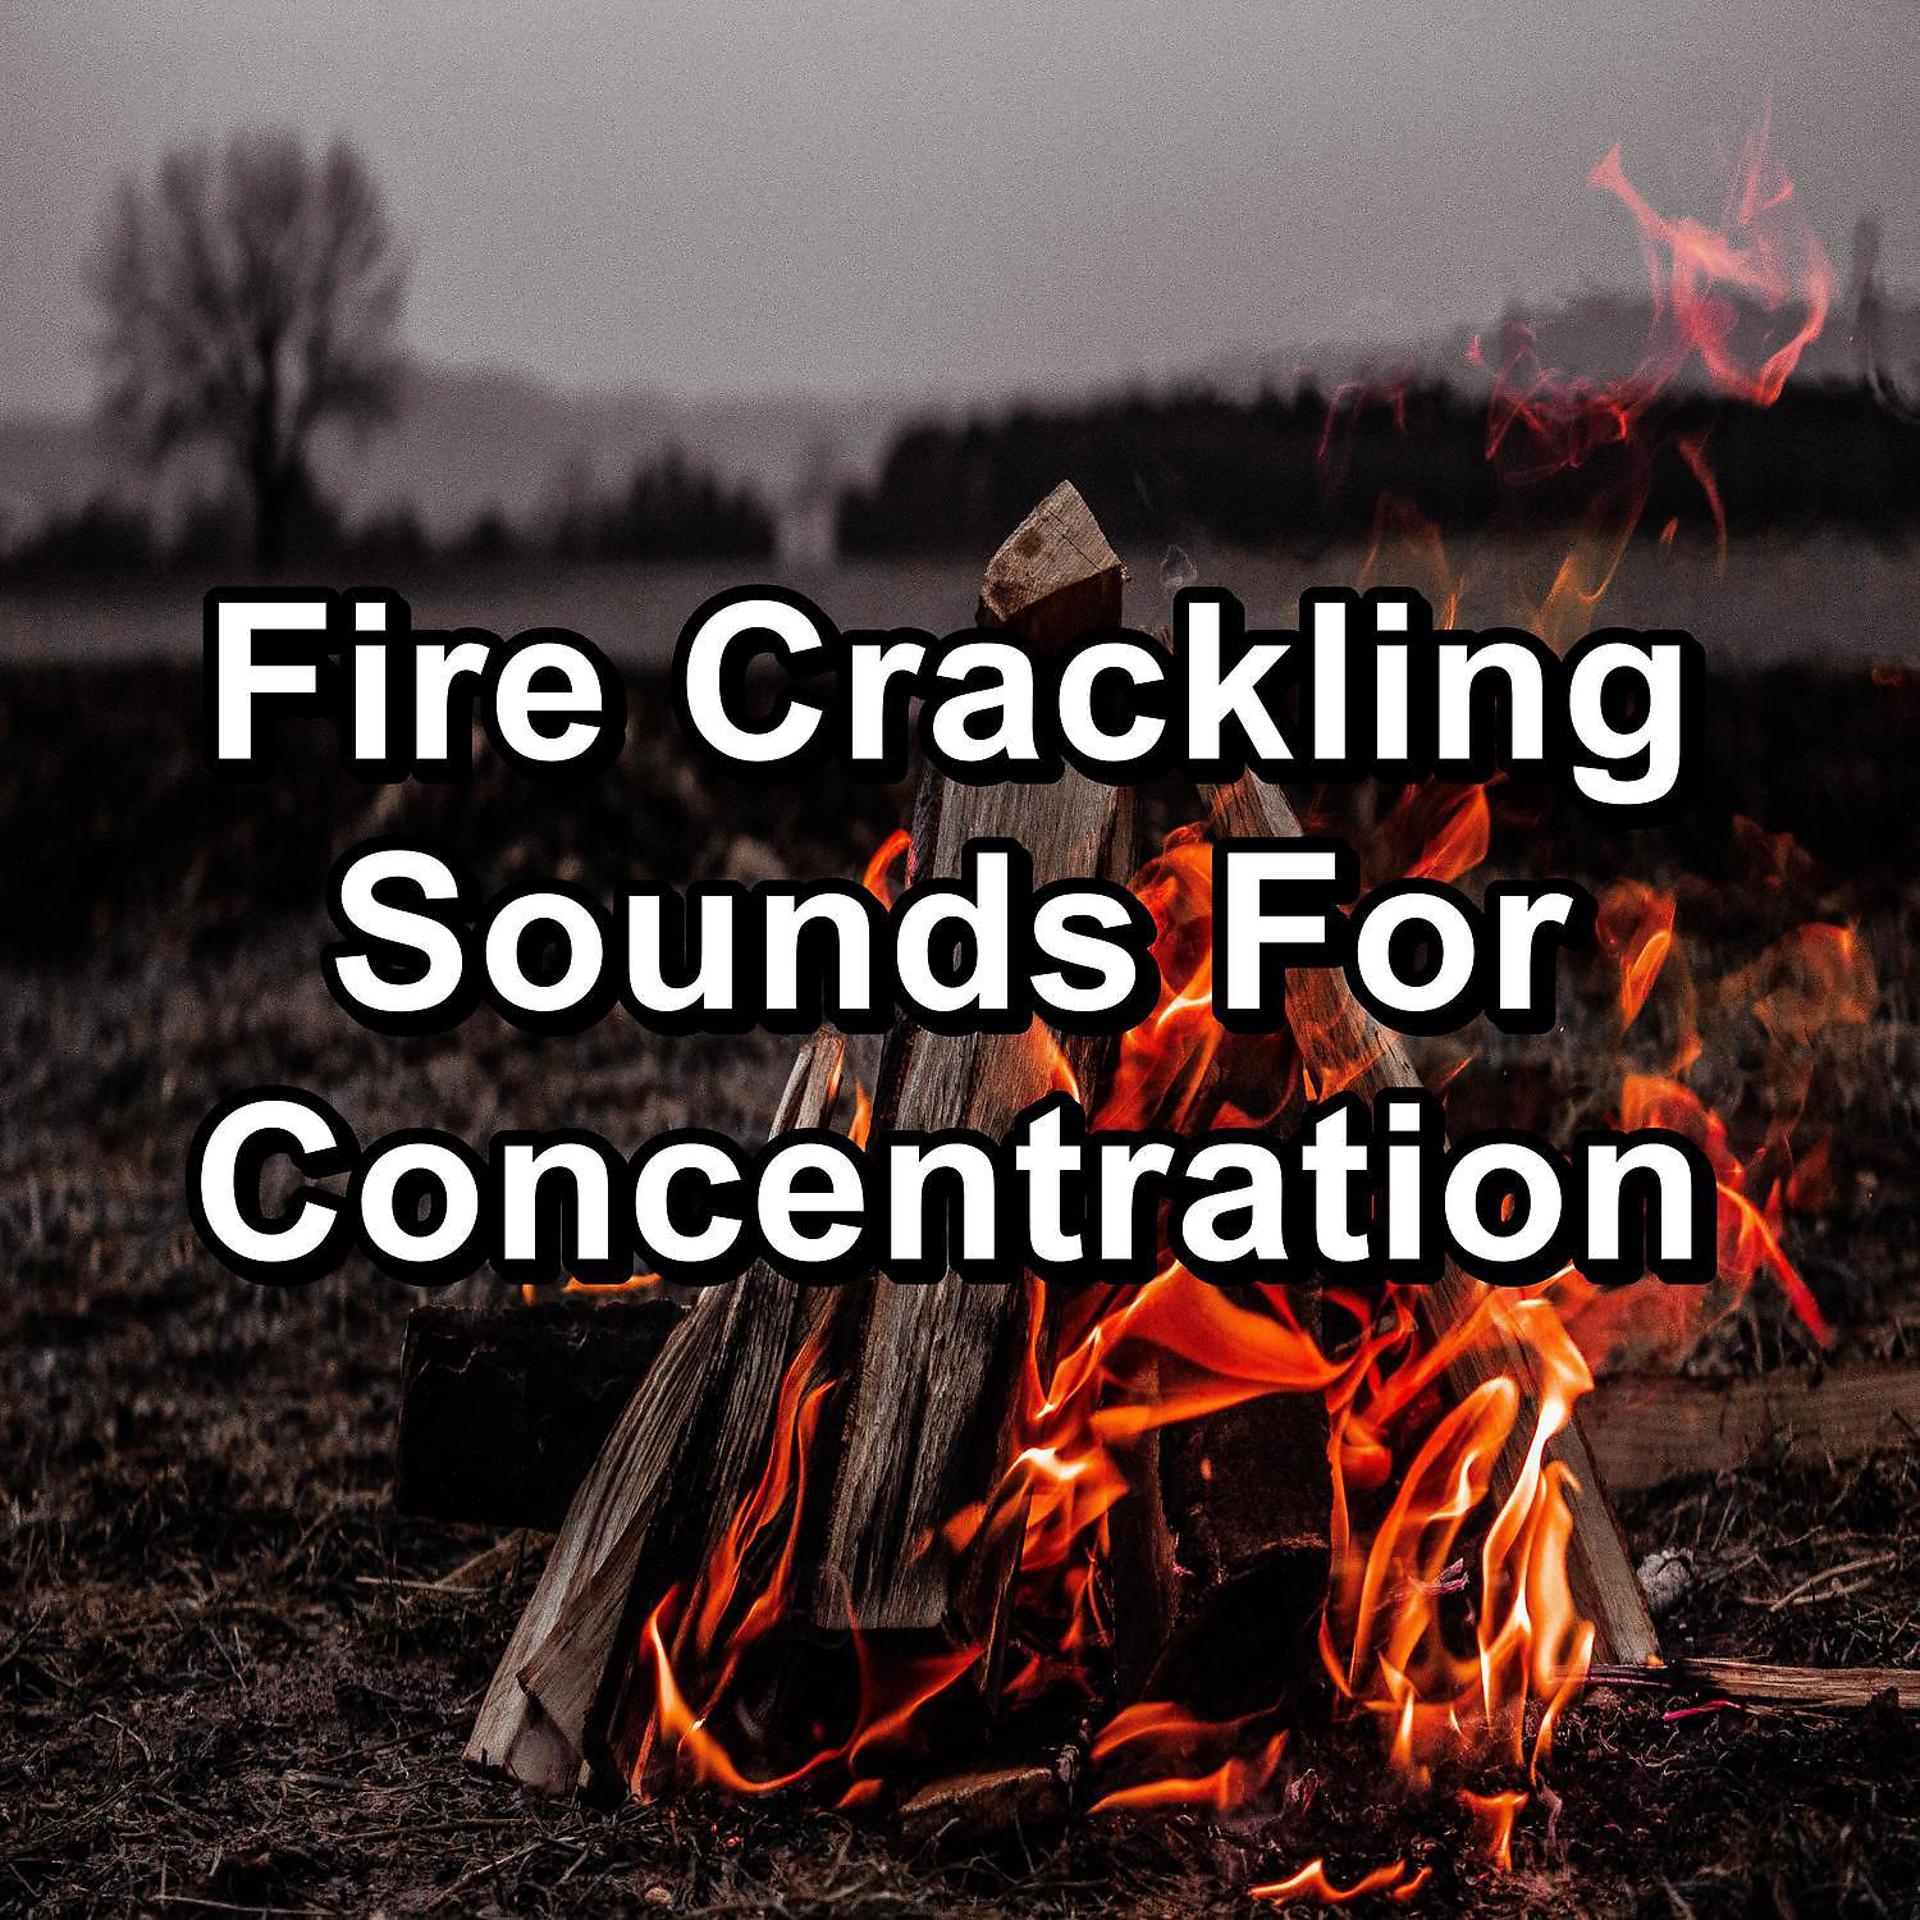 Постер альбома Crackling Camp Fire